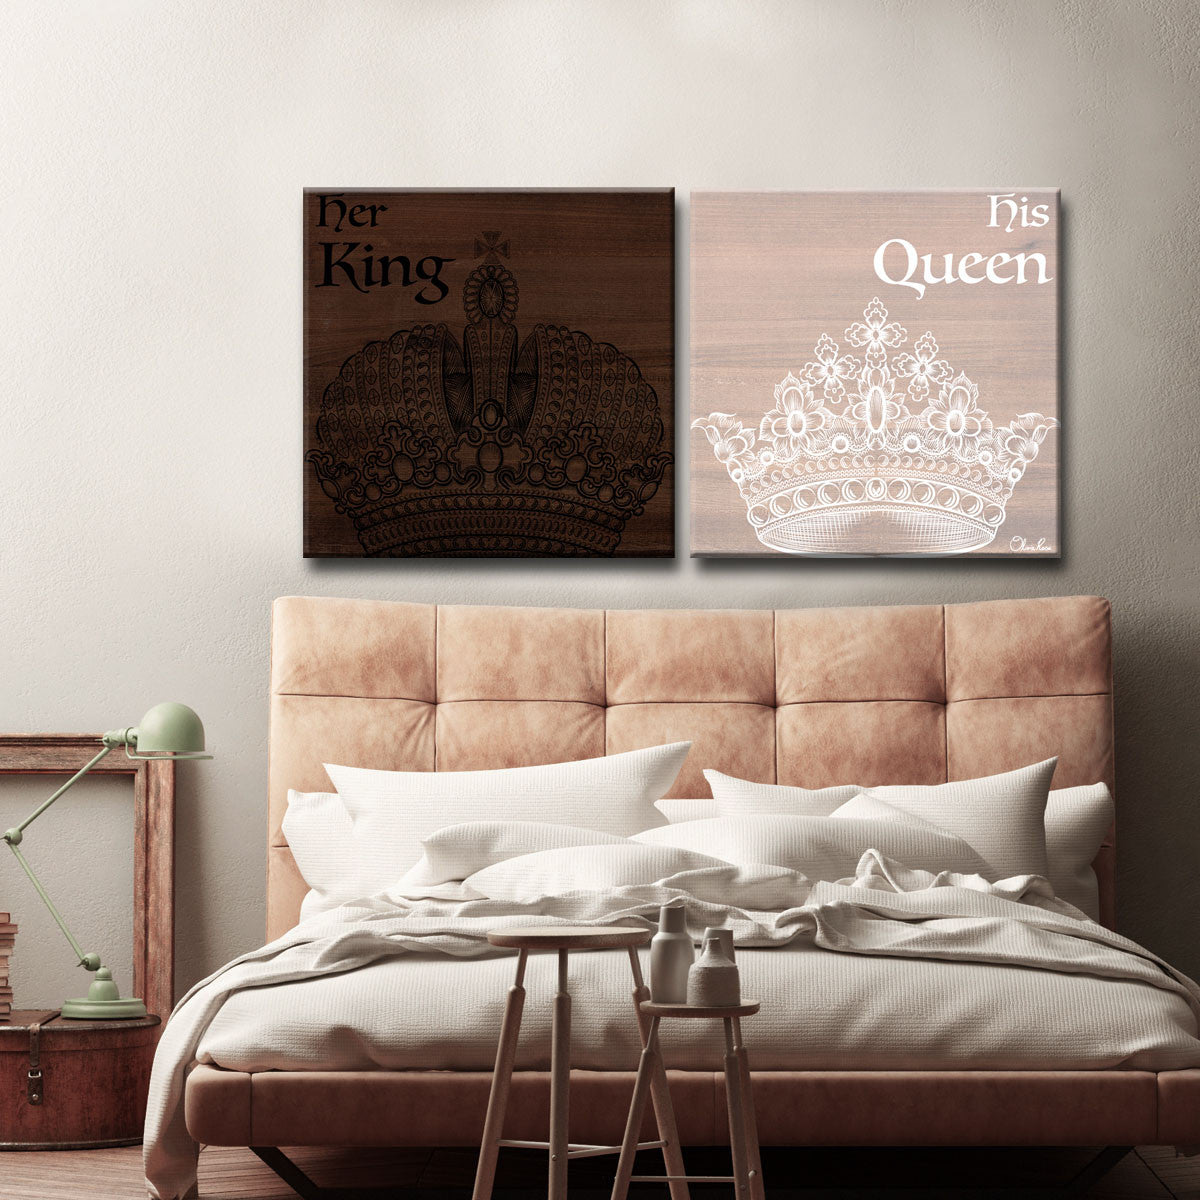 'Her King His Queen' 2-PC Canvas Art Set | Ready2Hangart – Ready2HangArt